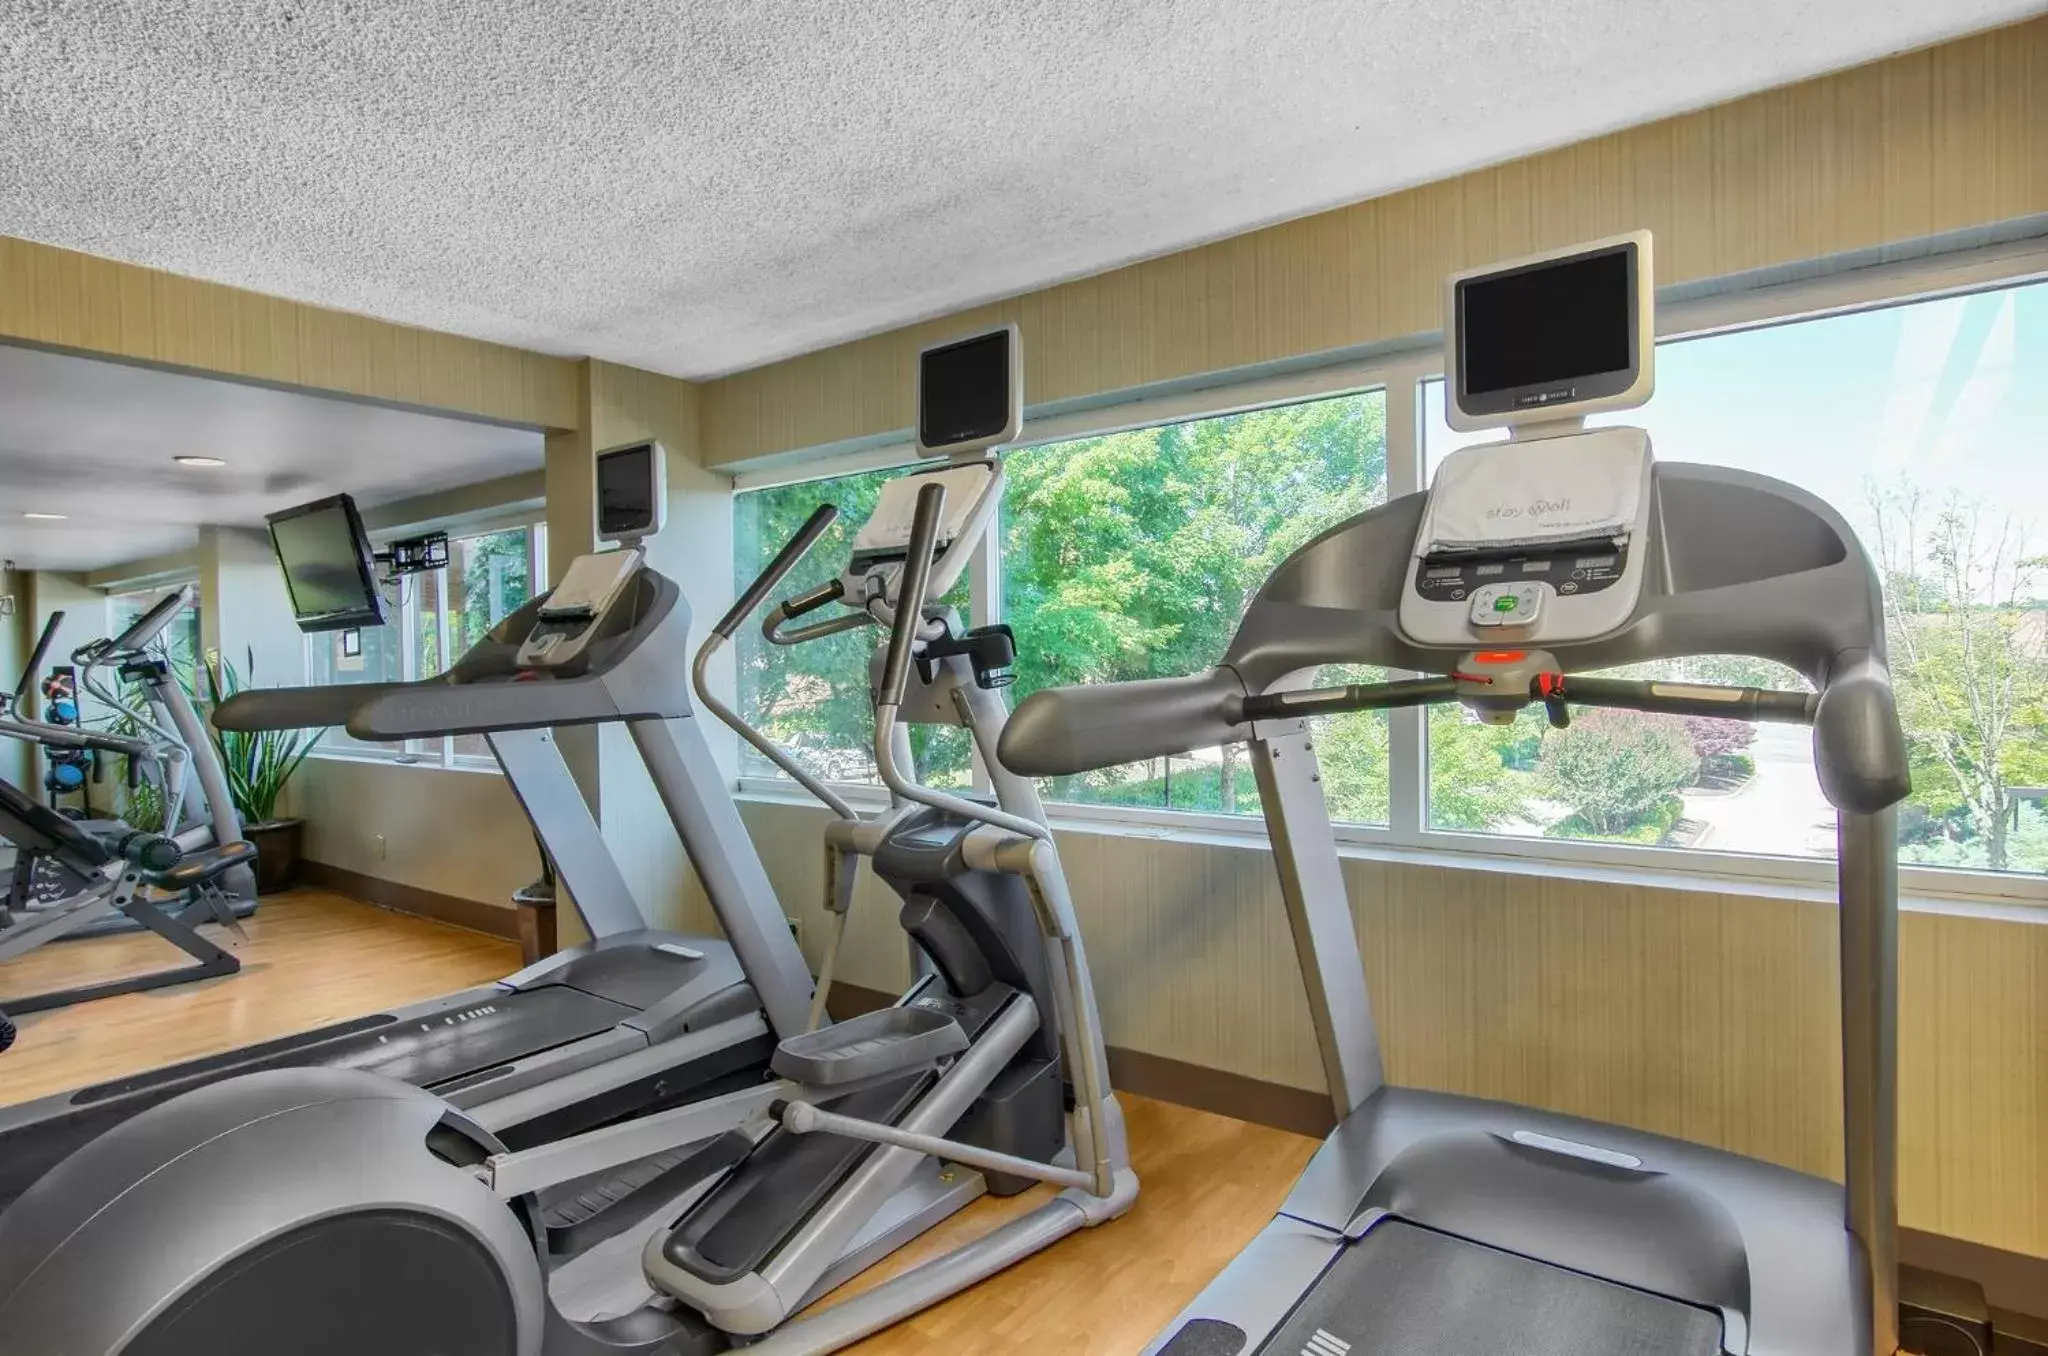 Fitness centre/facilities, Fitness Center/Facilities in Omni Charlottesville Hotel